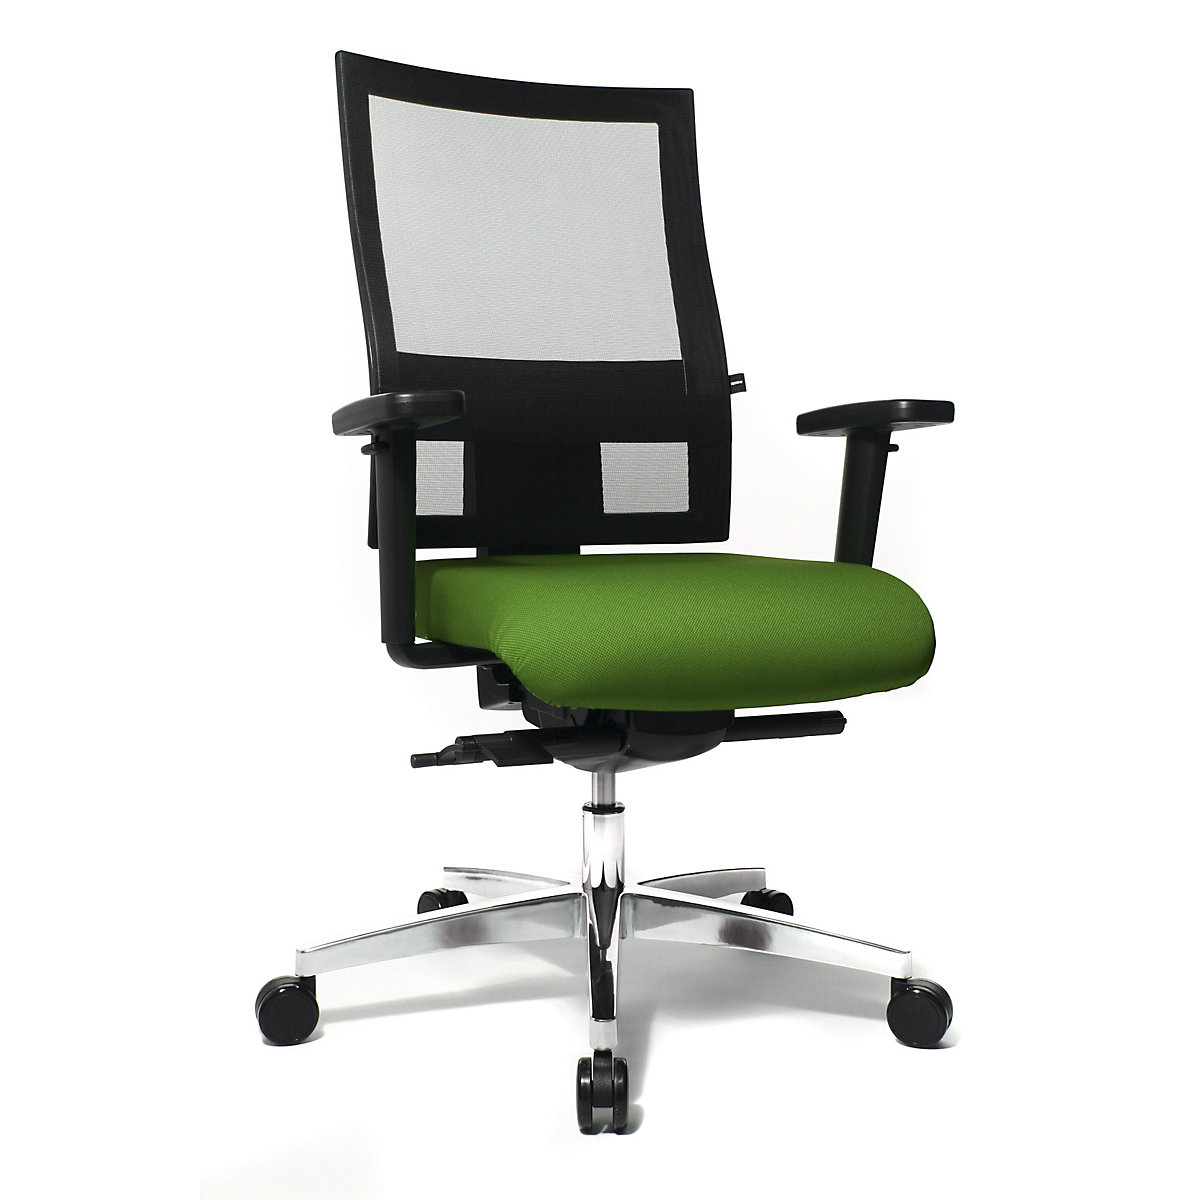 SITNESS 60 office swivel chair – Topstar